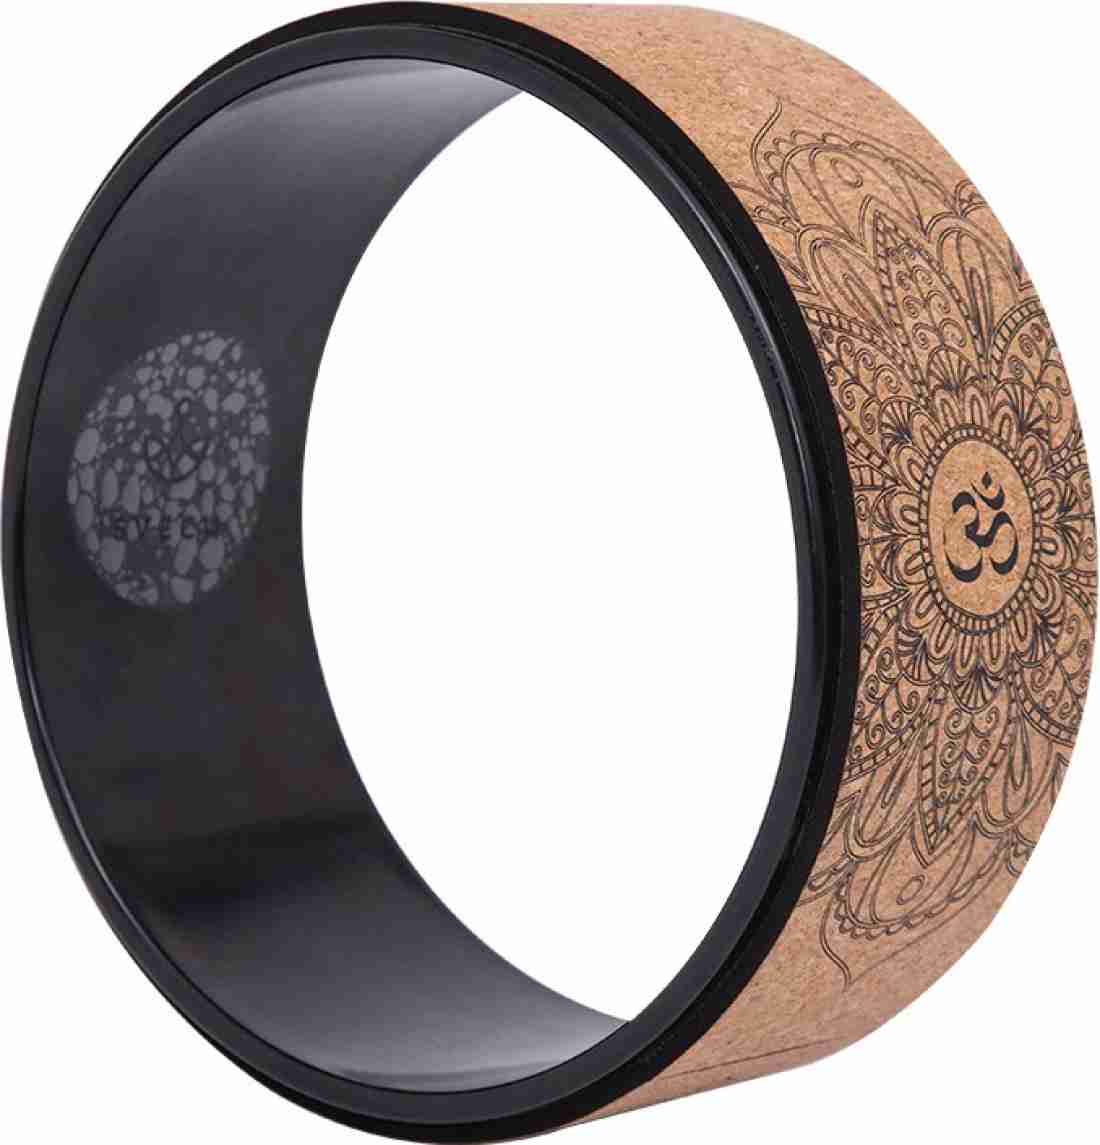 Svech Cork Fitness Yoga Wheel Pilates Ring Price in India - Buy Svech Cork  Fitness Yoga Wheel Pilates Ring online at